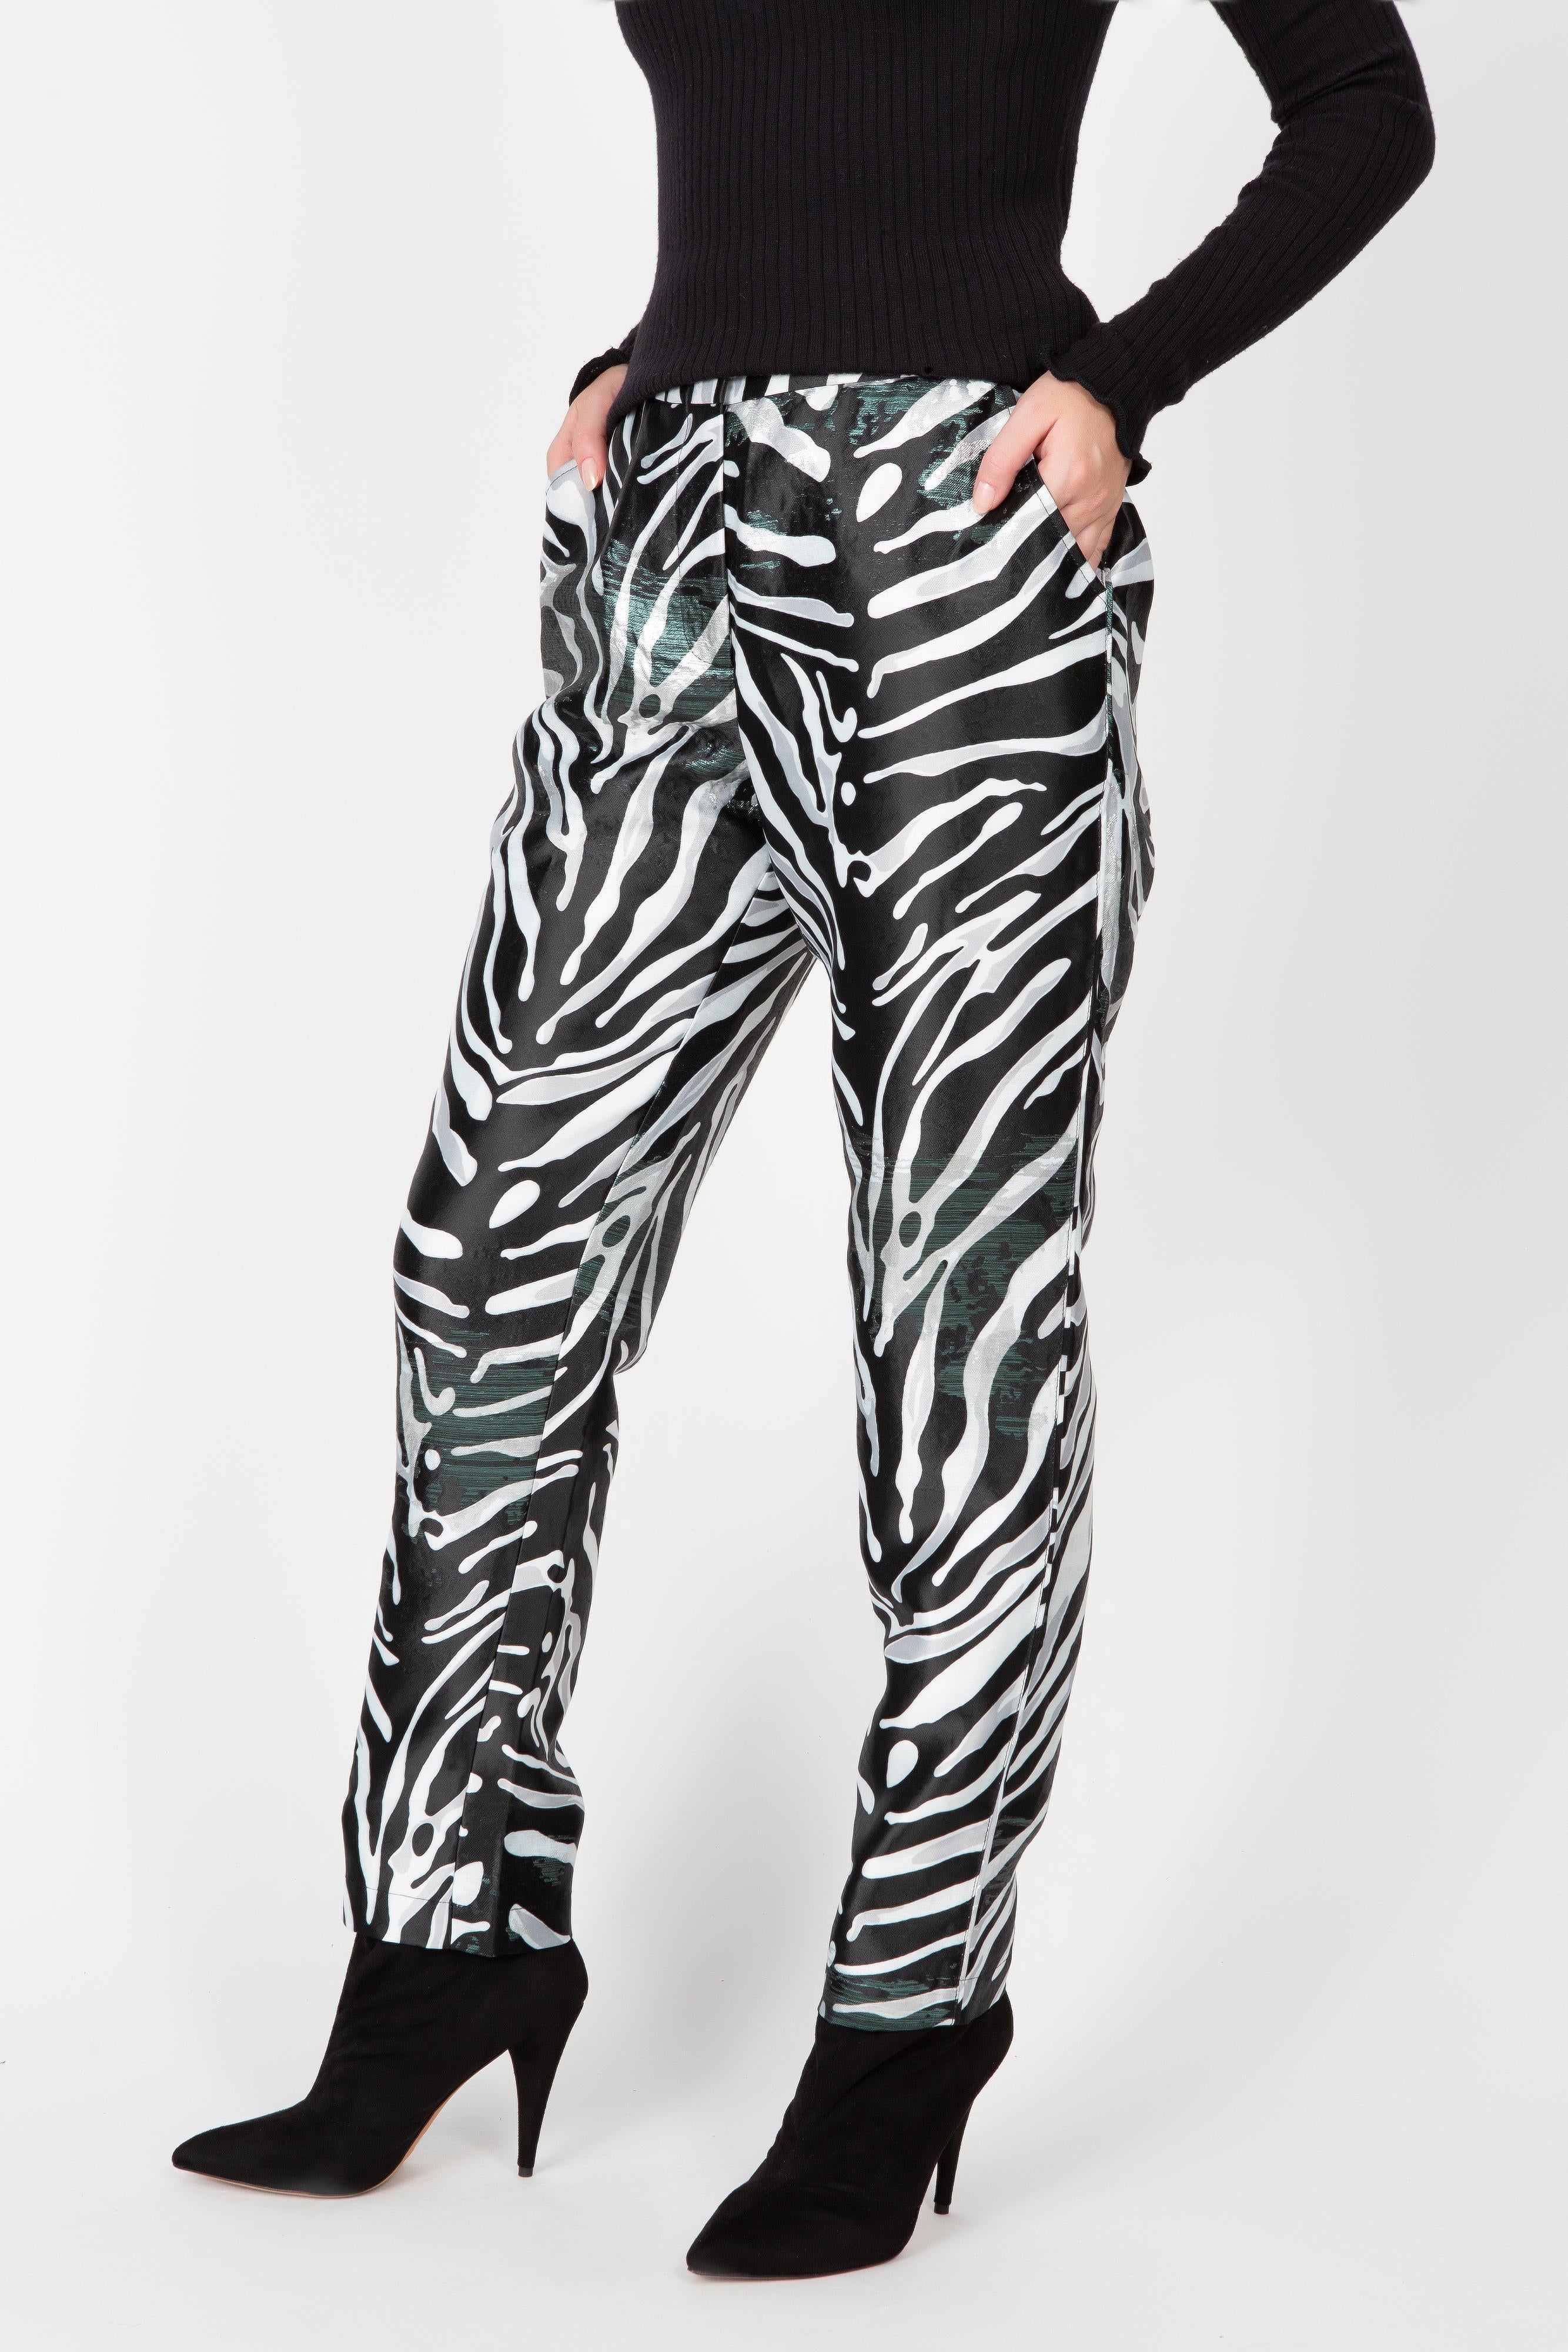 Party Girl Zebra Pants